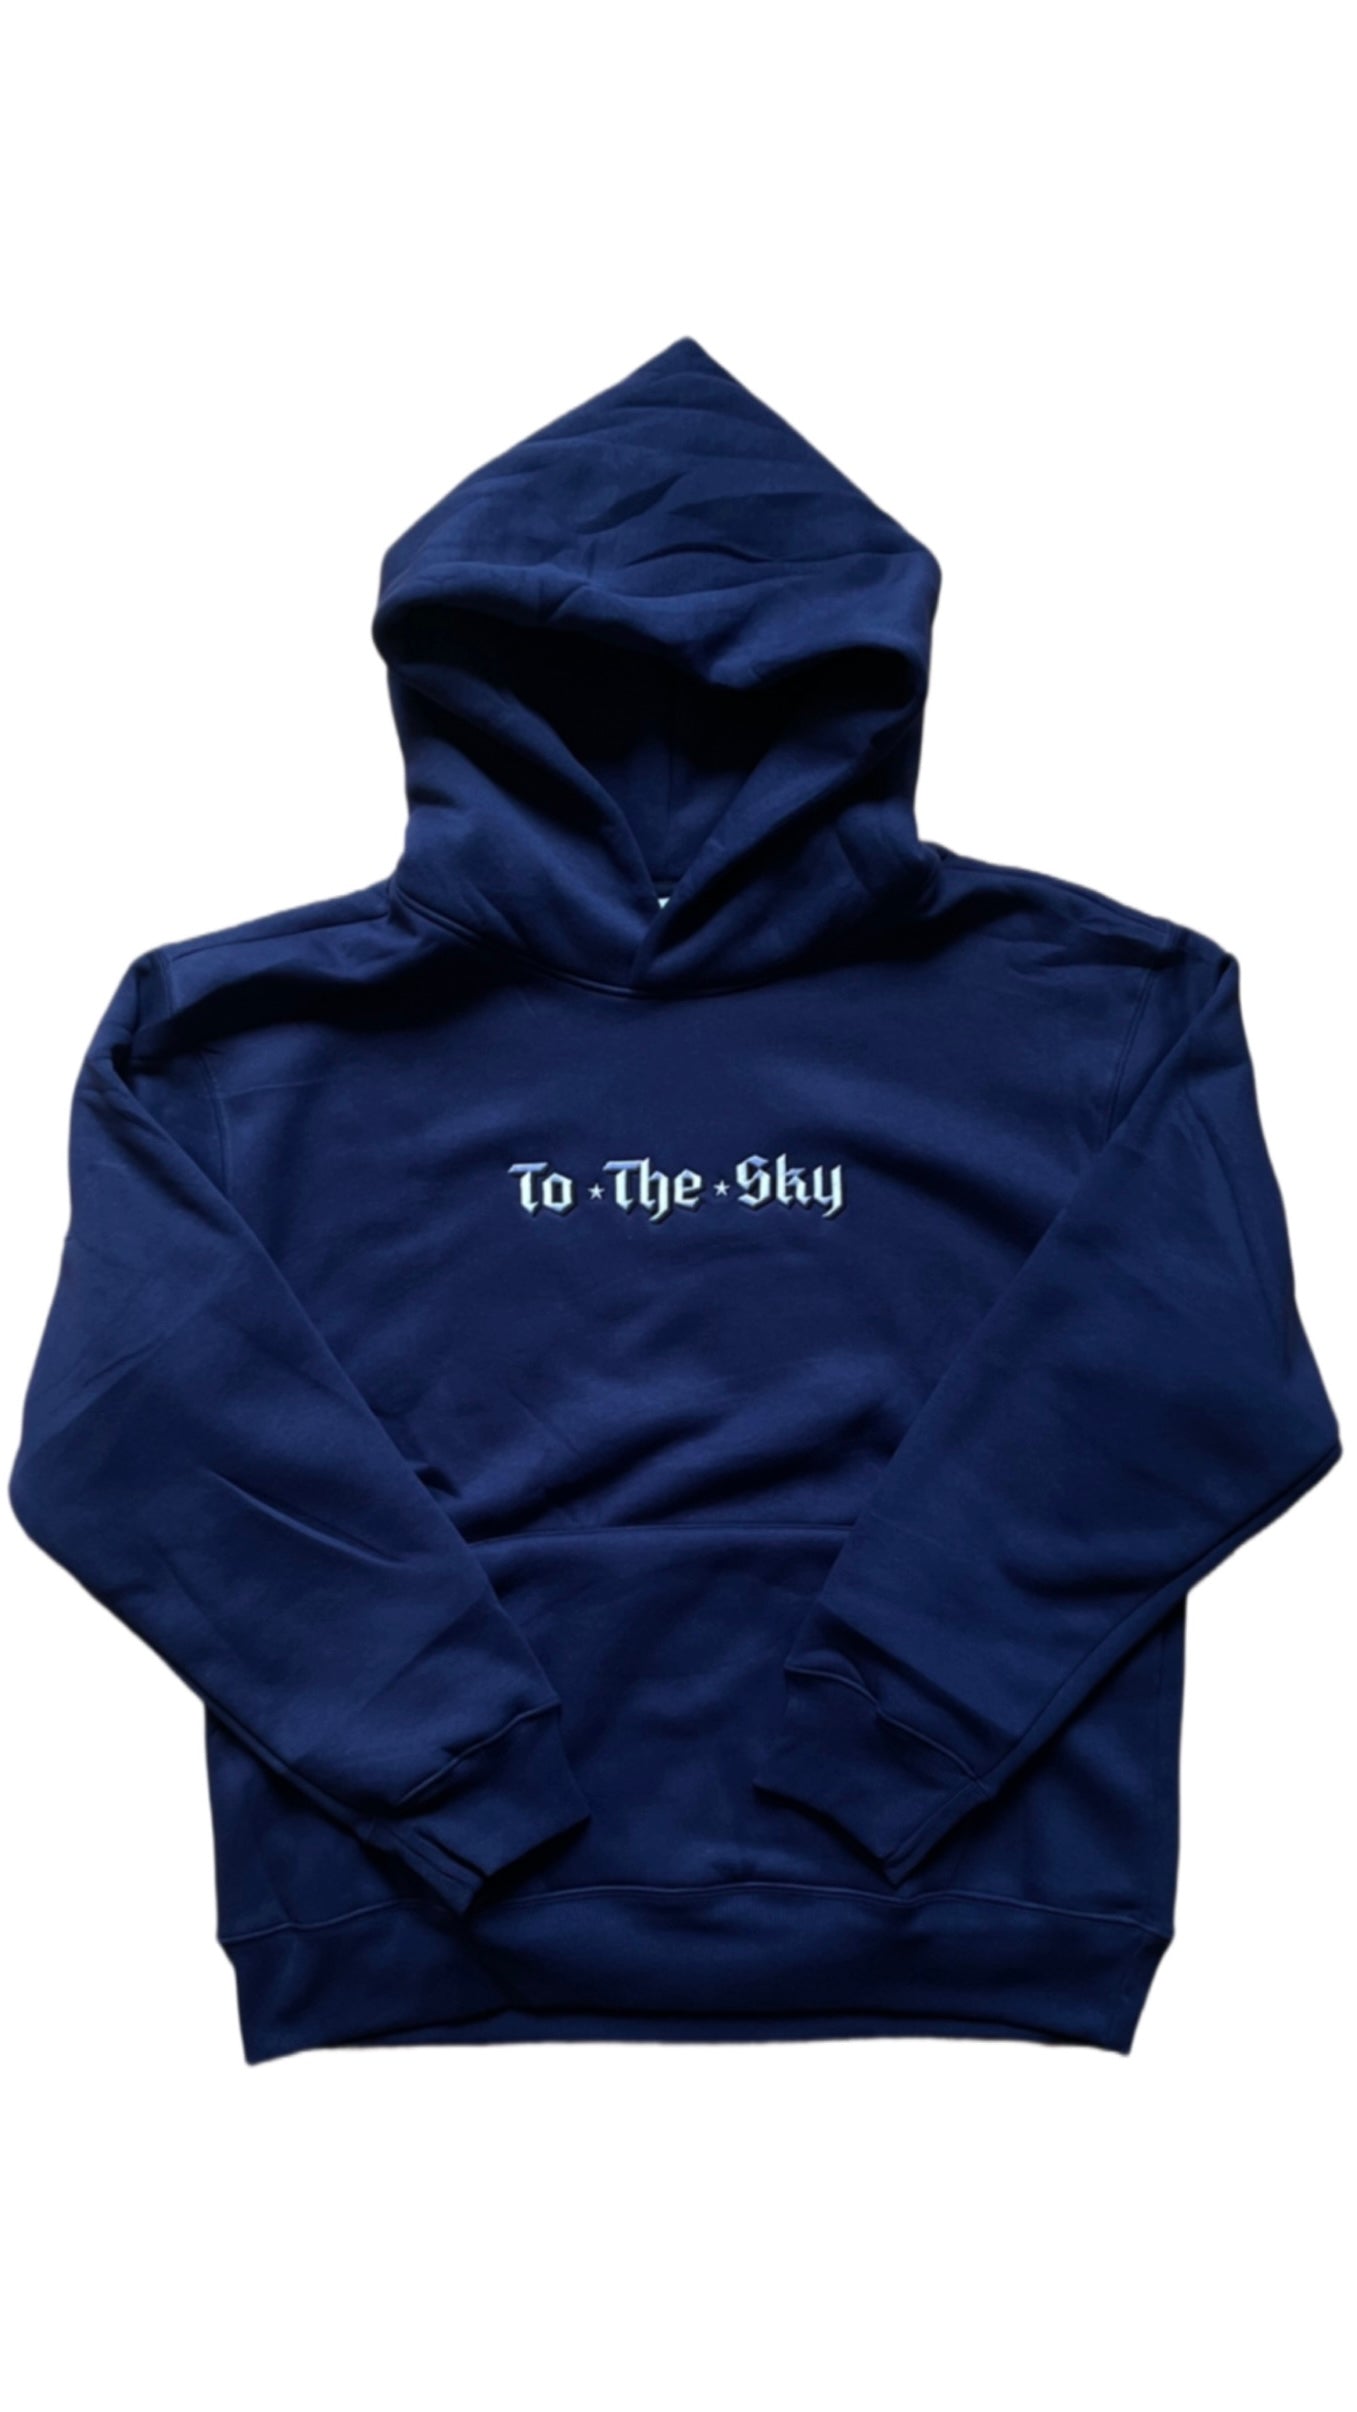 “To The Sky” heavyweight hoodie - Navy blue